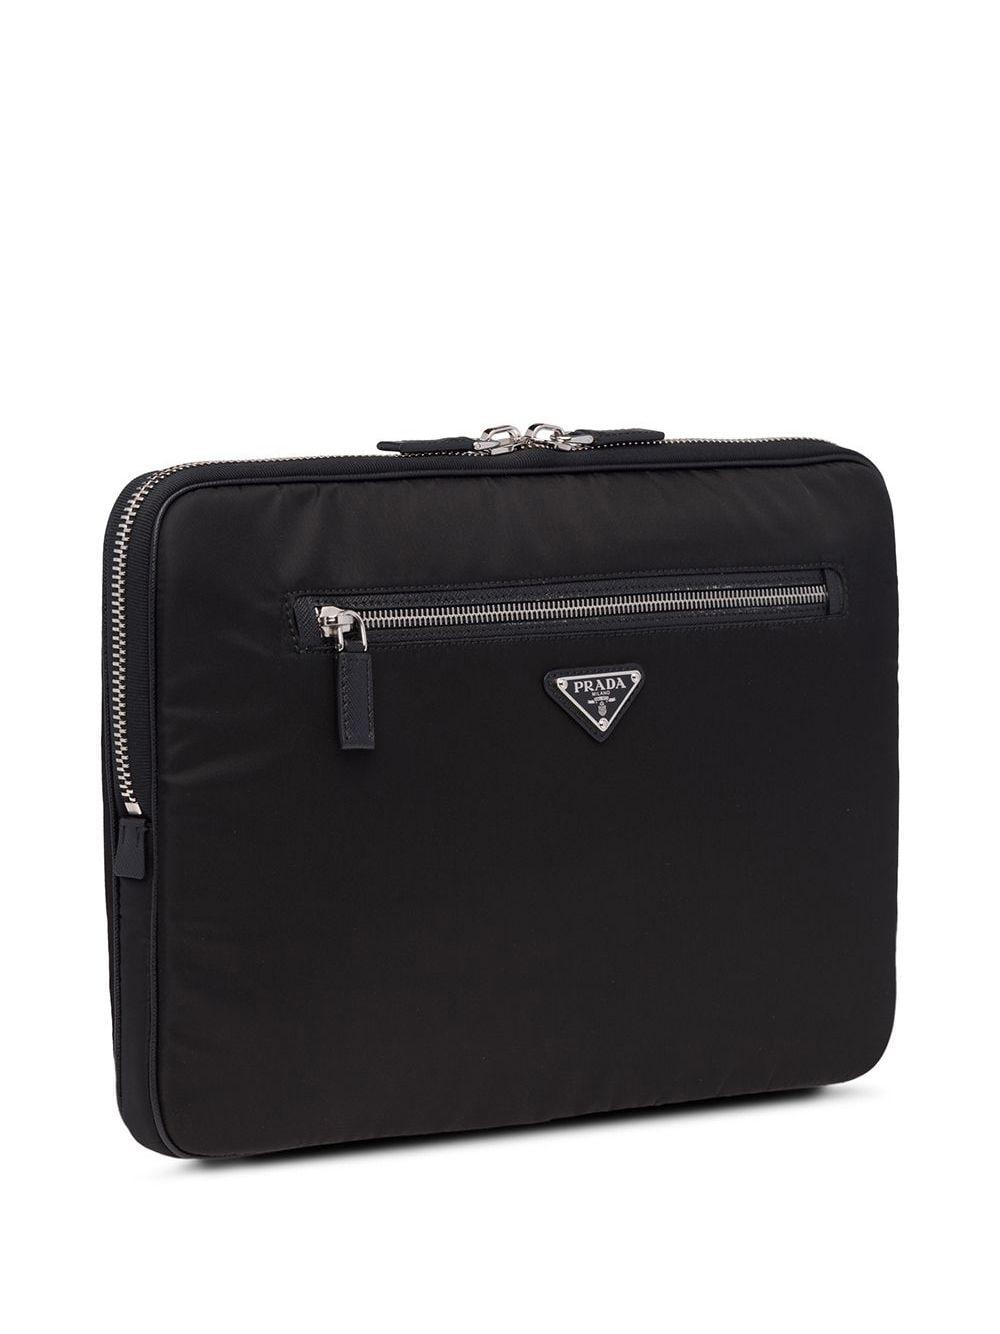 Prada Leather Saffiano Laptop Case in Black for Men - Lyst